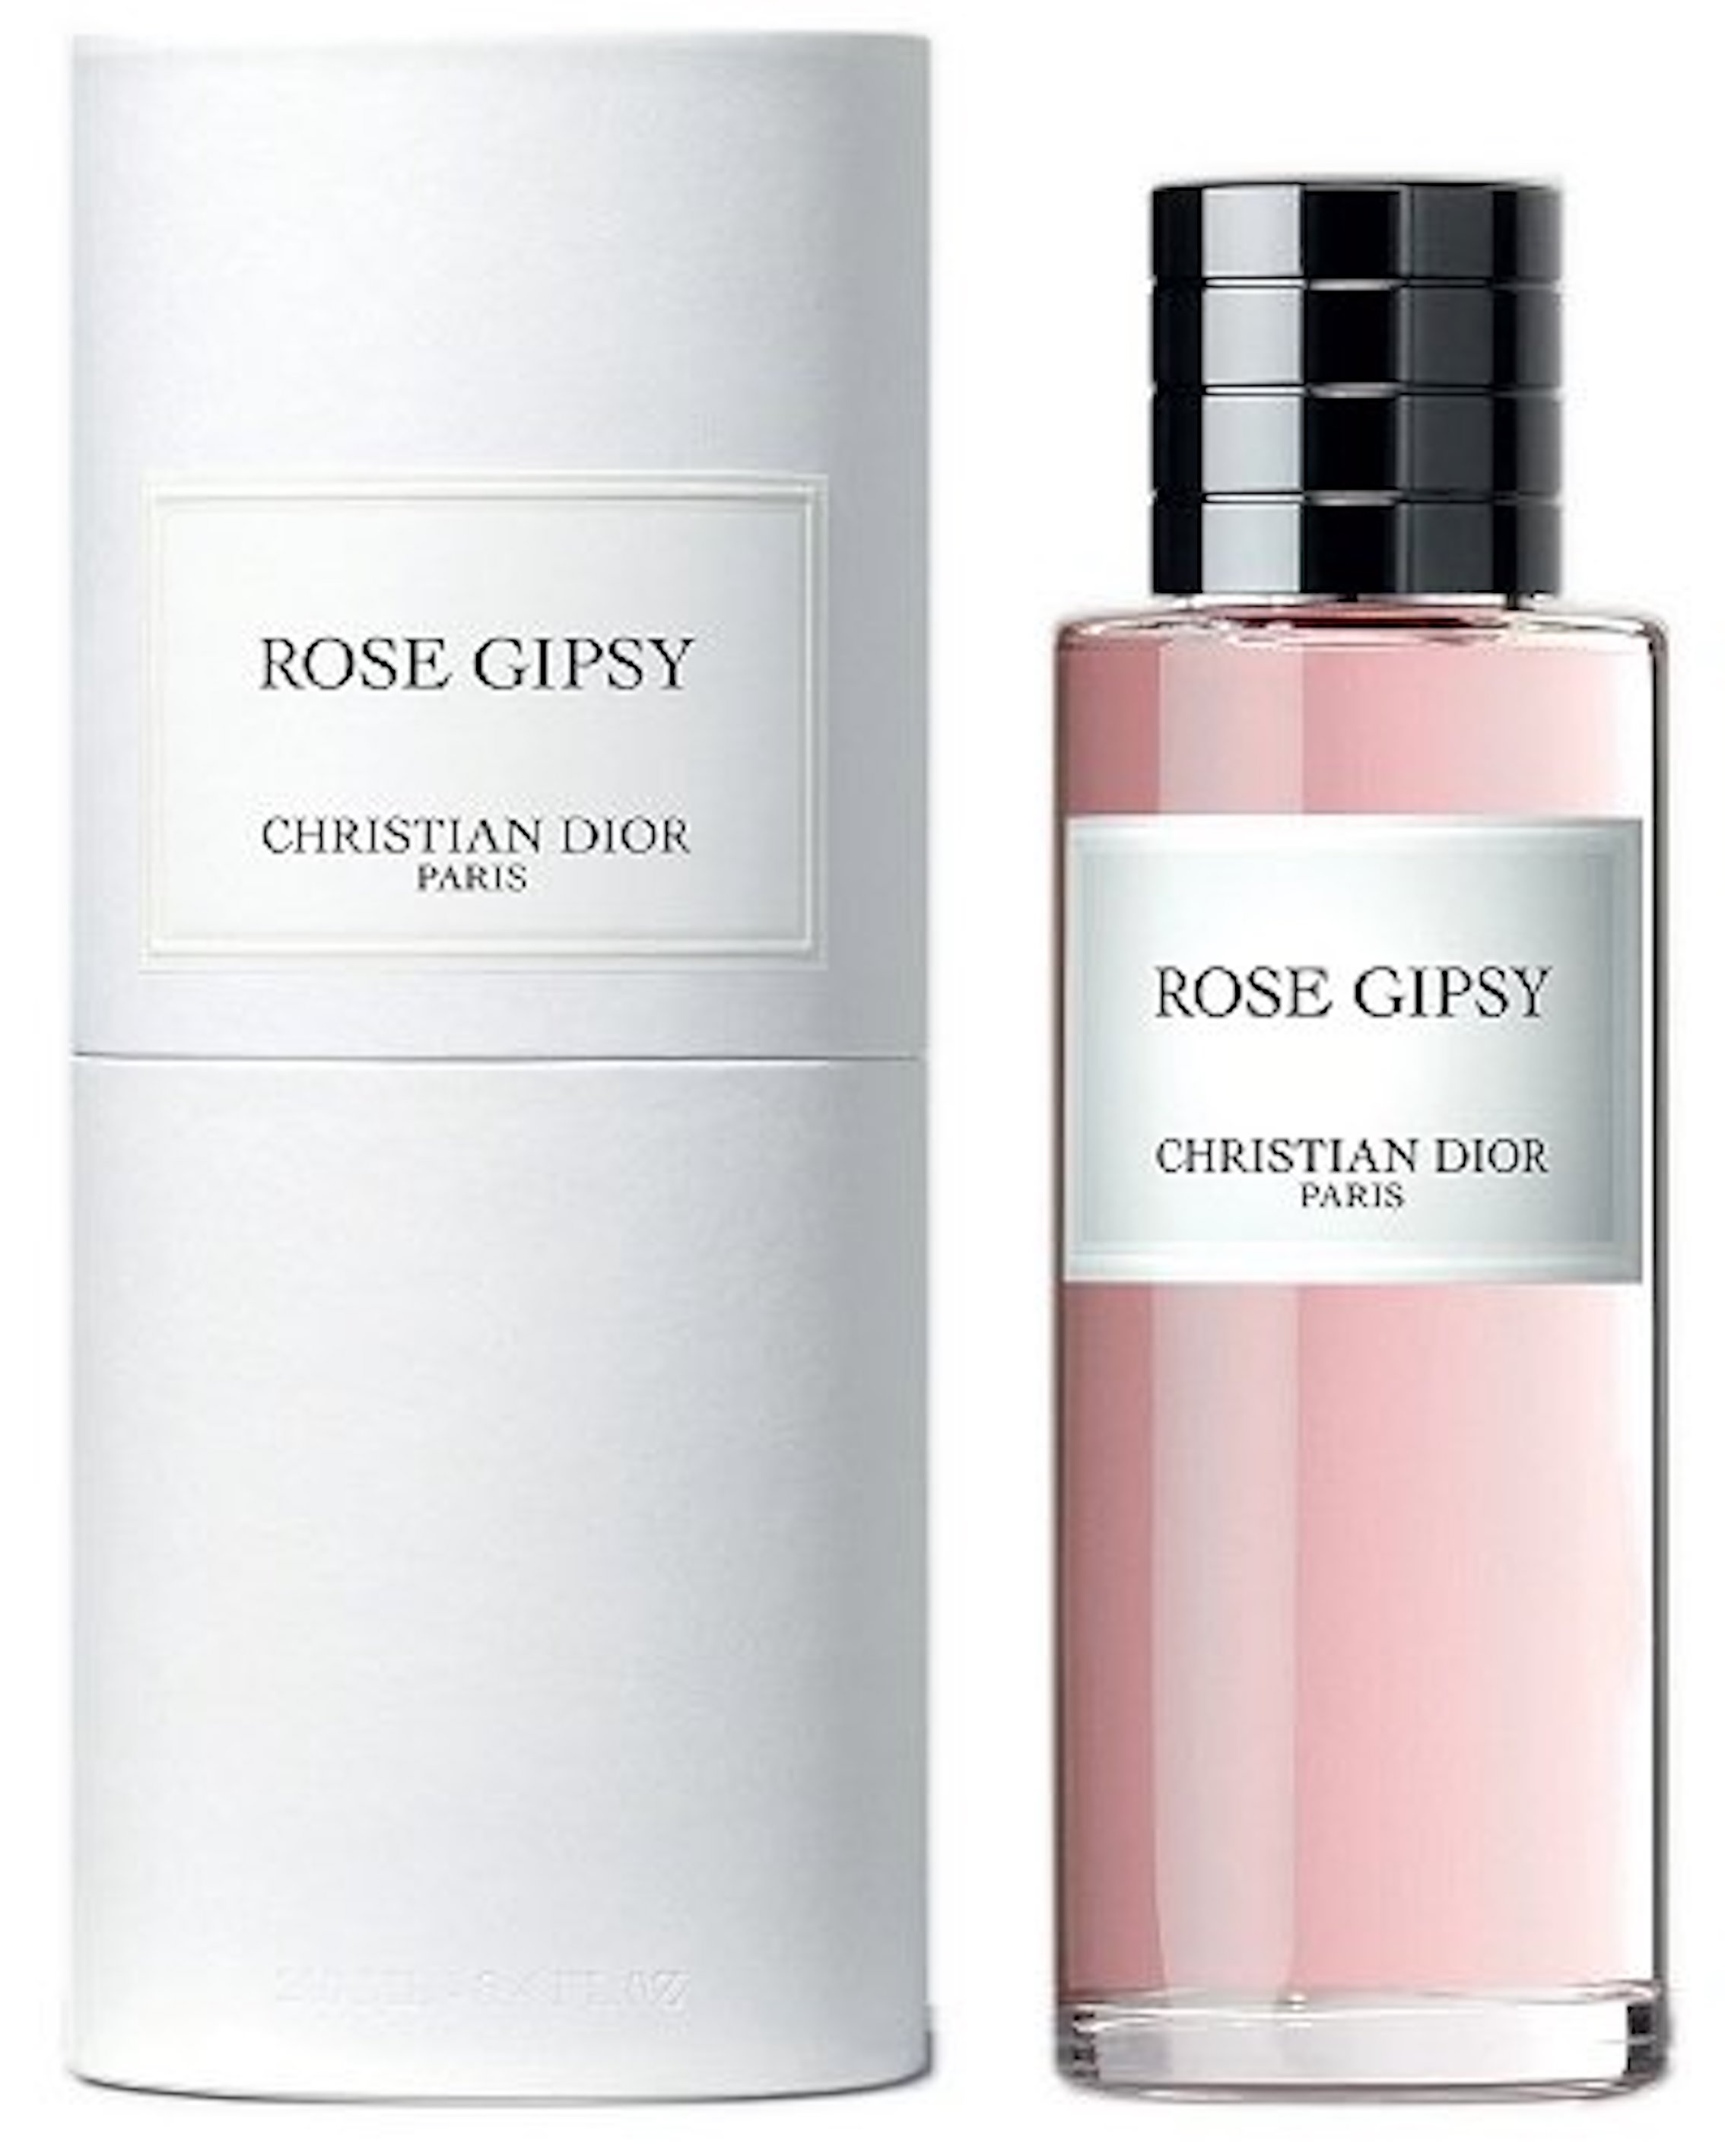 christian dior rose gipsy